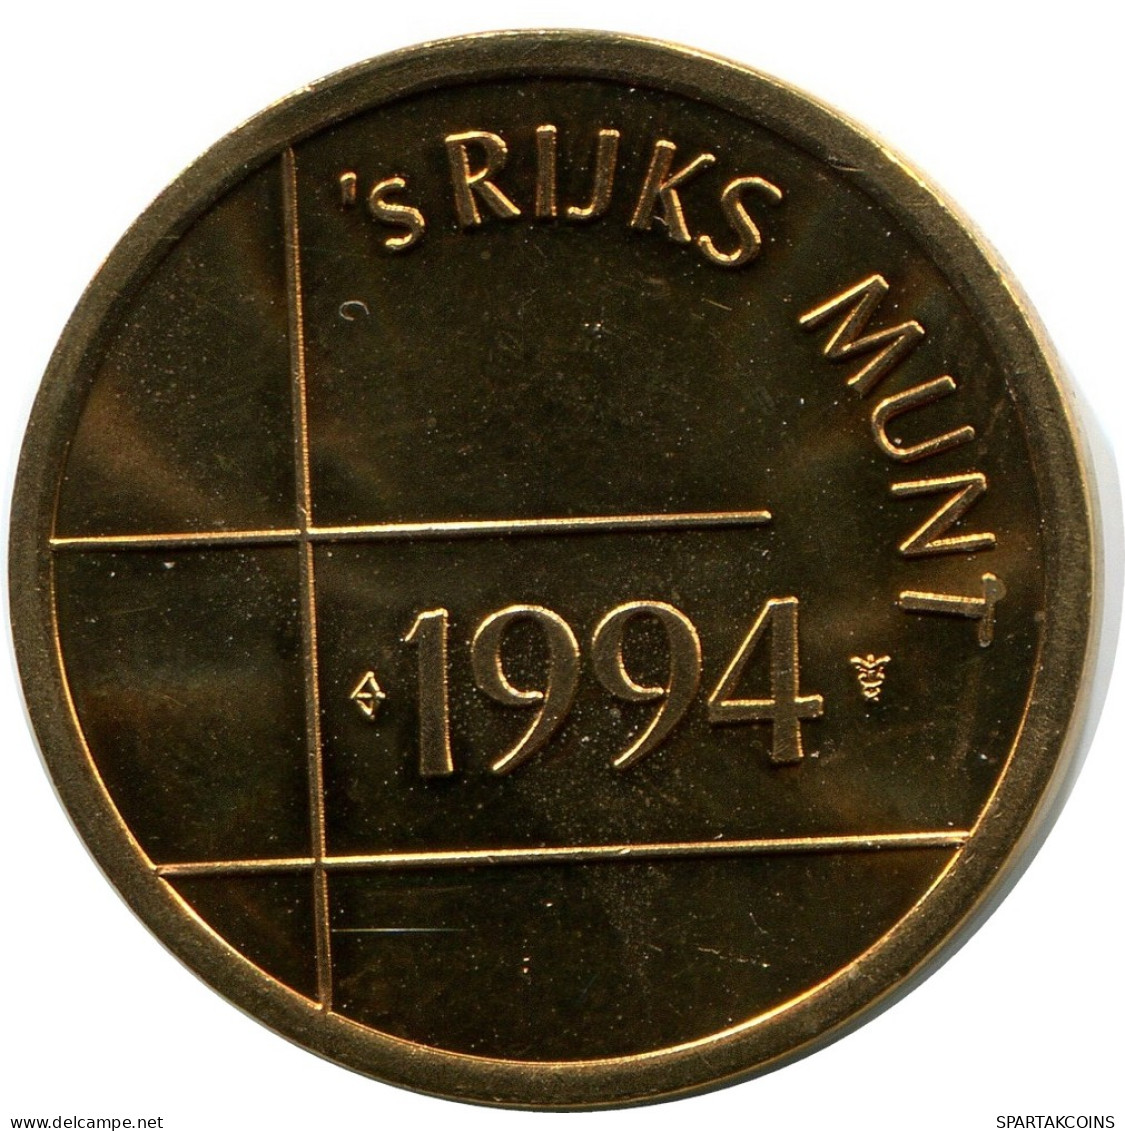 1994 ROYAL DUTCH MINT SET TOKEN NIEDERLANDE MINT (From BU Mint Set) #AH031.D - Mint Sets & Proof Sets